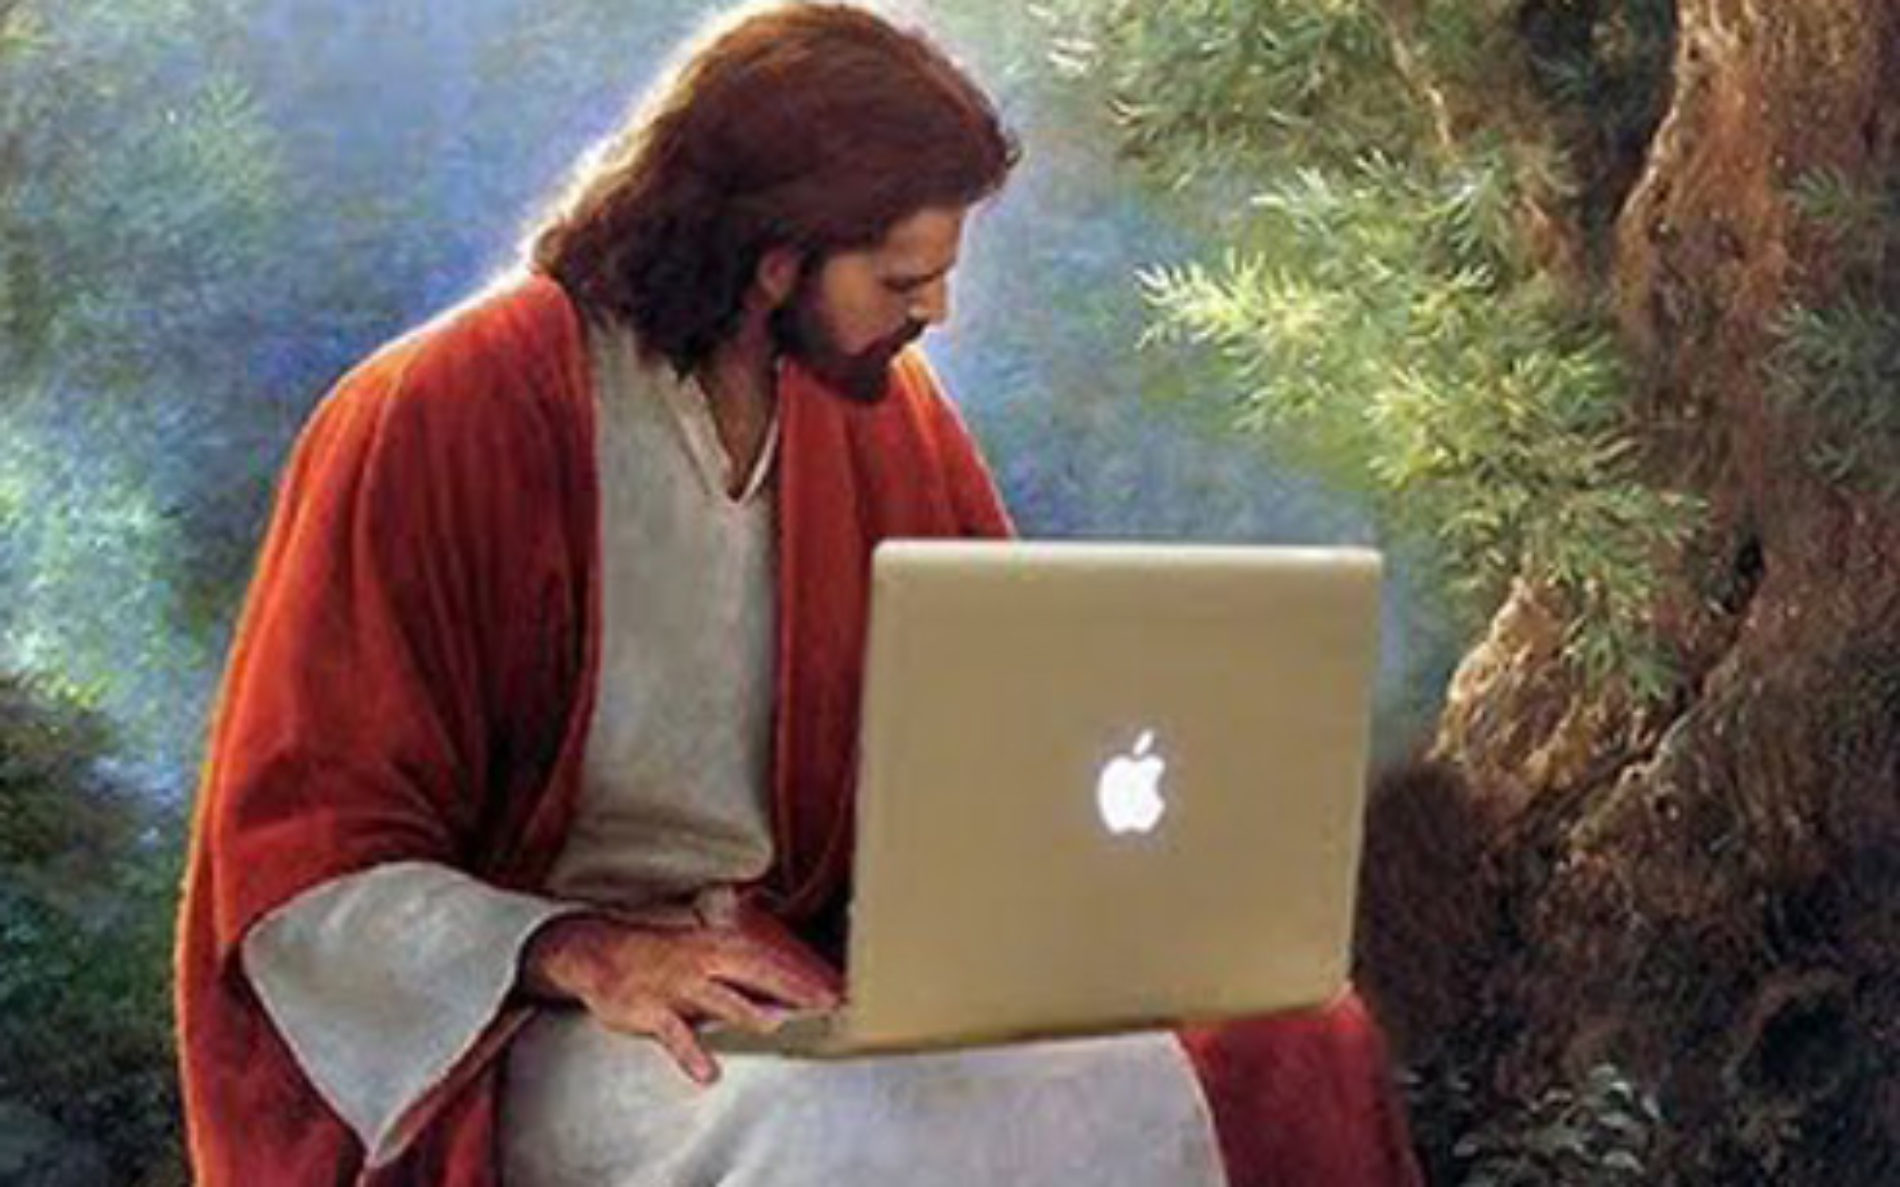 Jesus usaria as Redes Sociais?